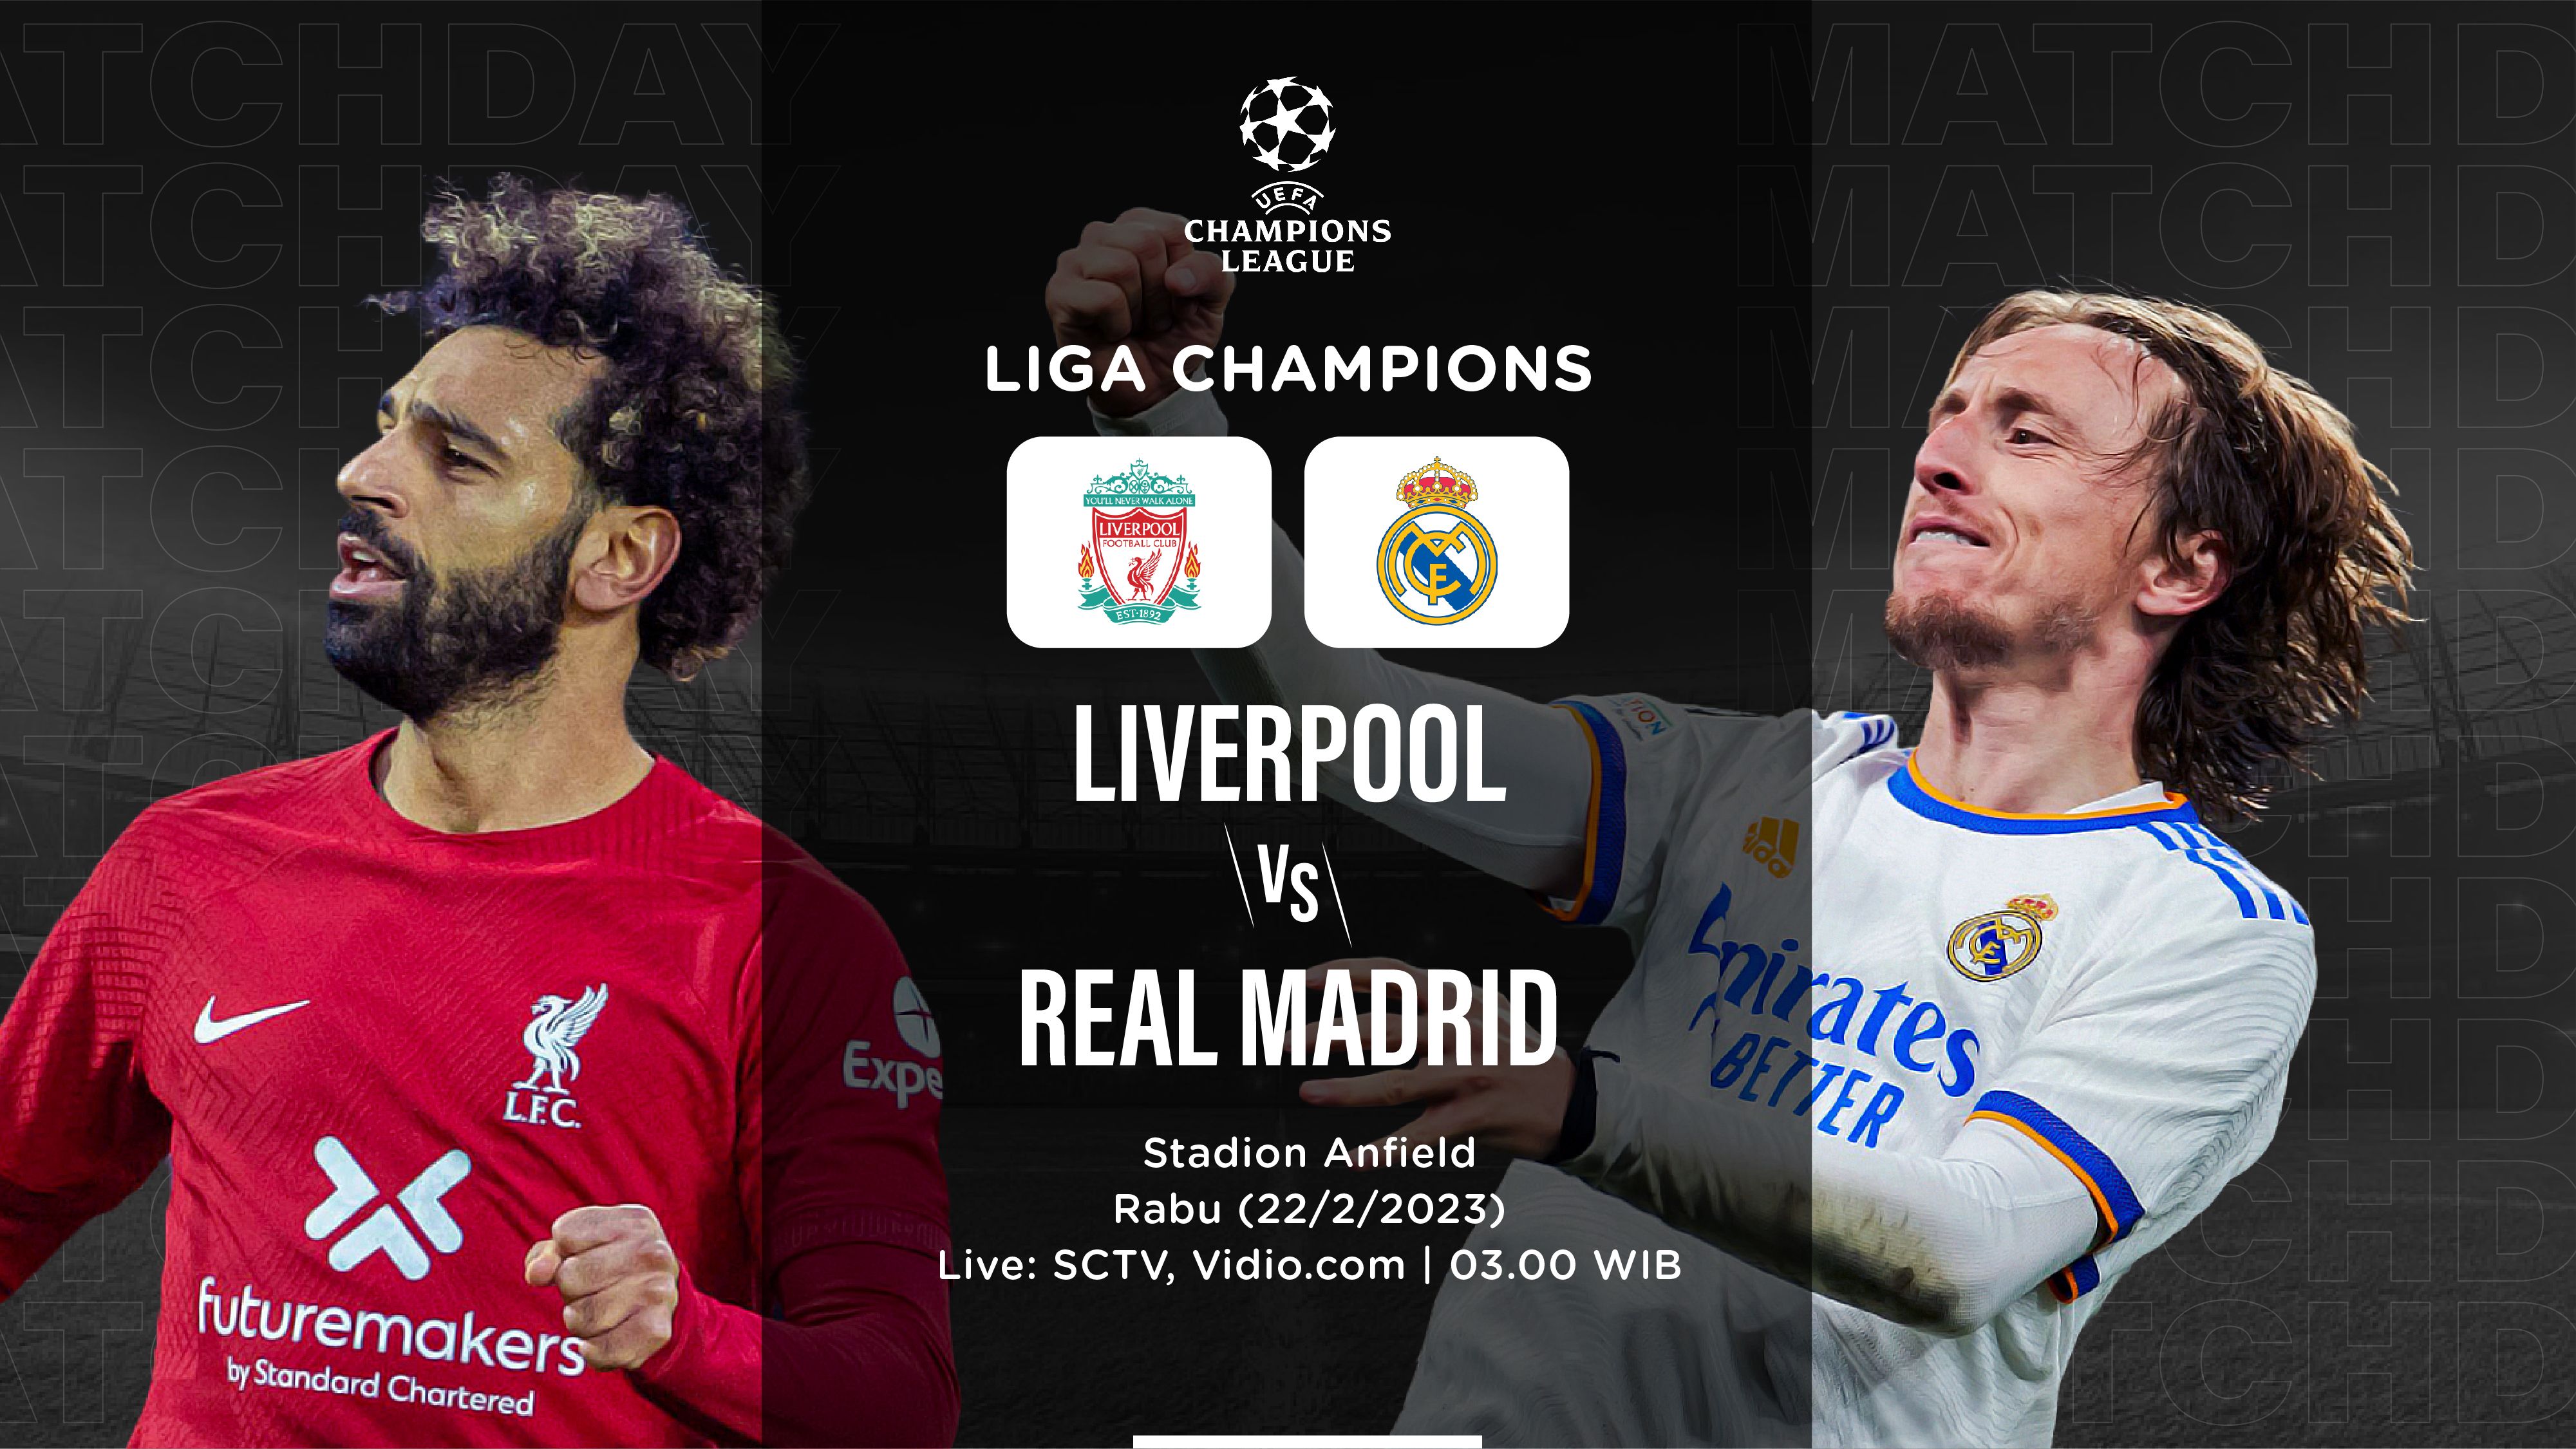 Cover pertandingan Liga Champions, Liverpool vs Real Madrid (22/2/2023). (Hendy/Skor.id)